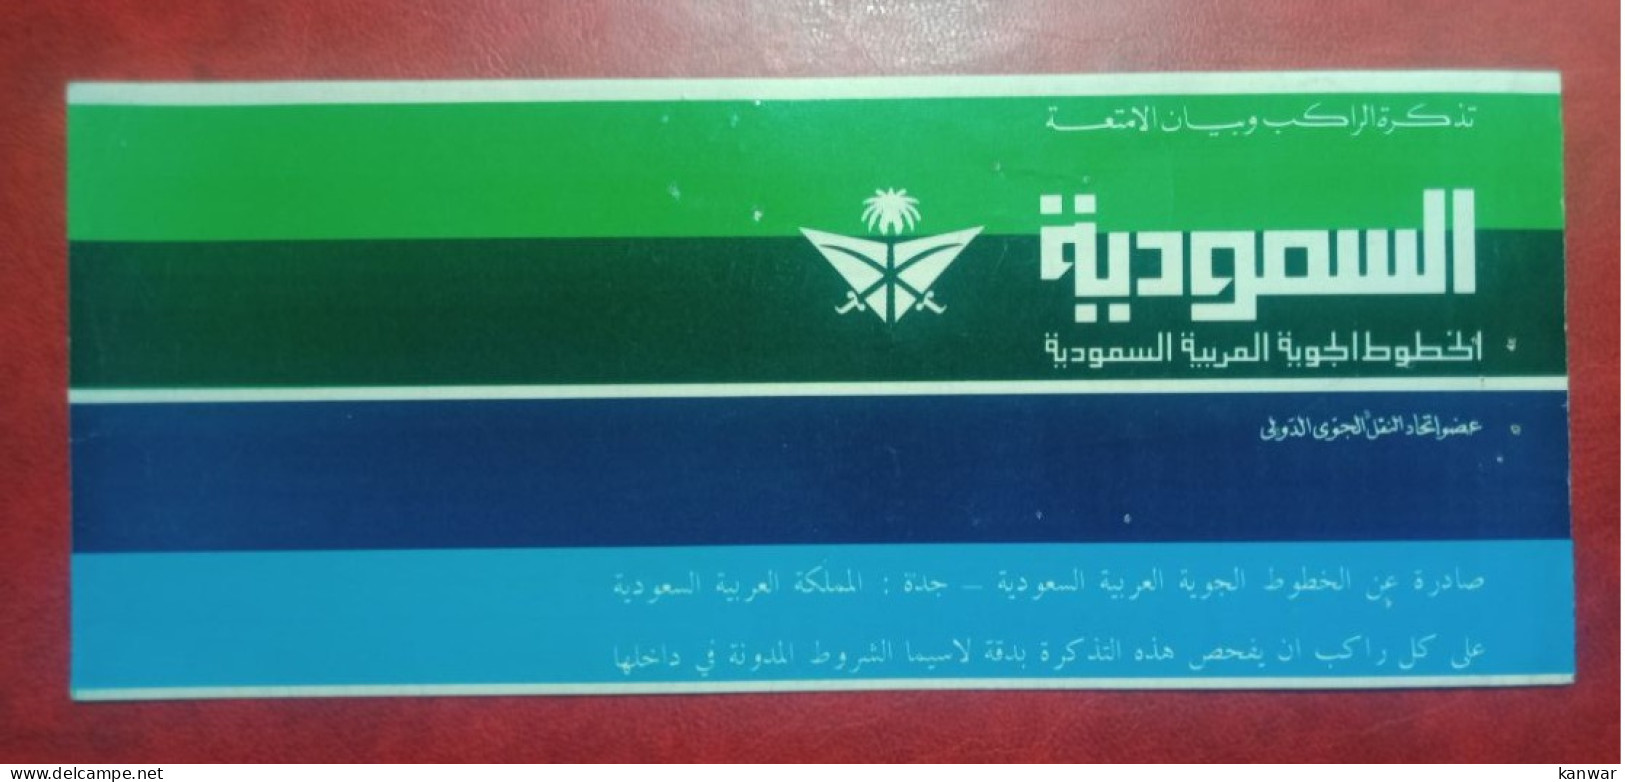 1994 SAUDI ARABIAN AIRLINES PASSENGER TICKET AND BAGGAGE CHECK - Billetes